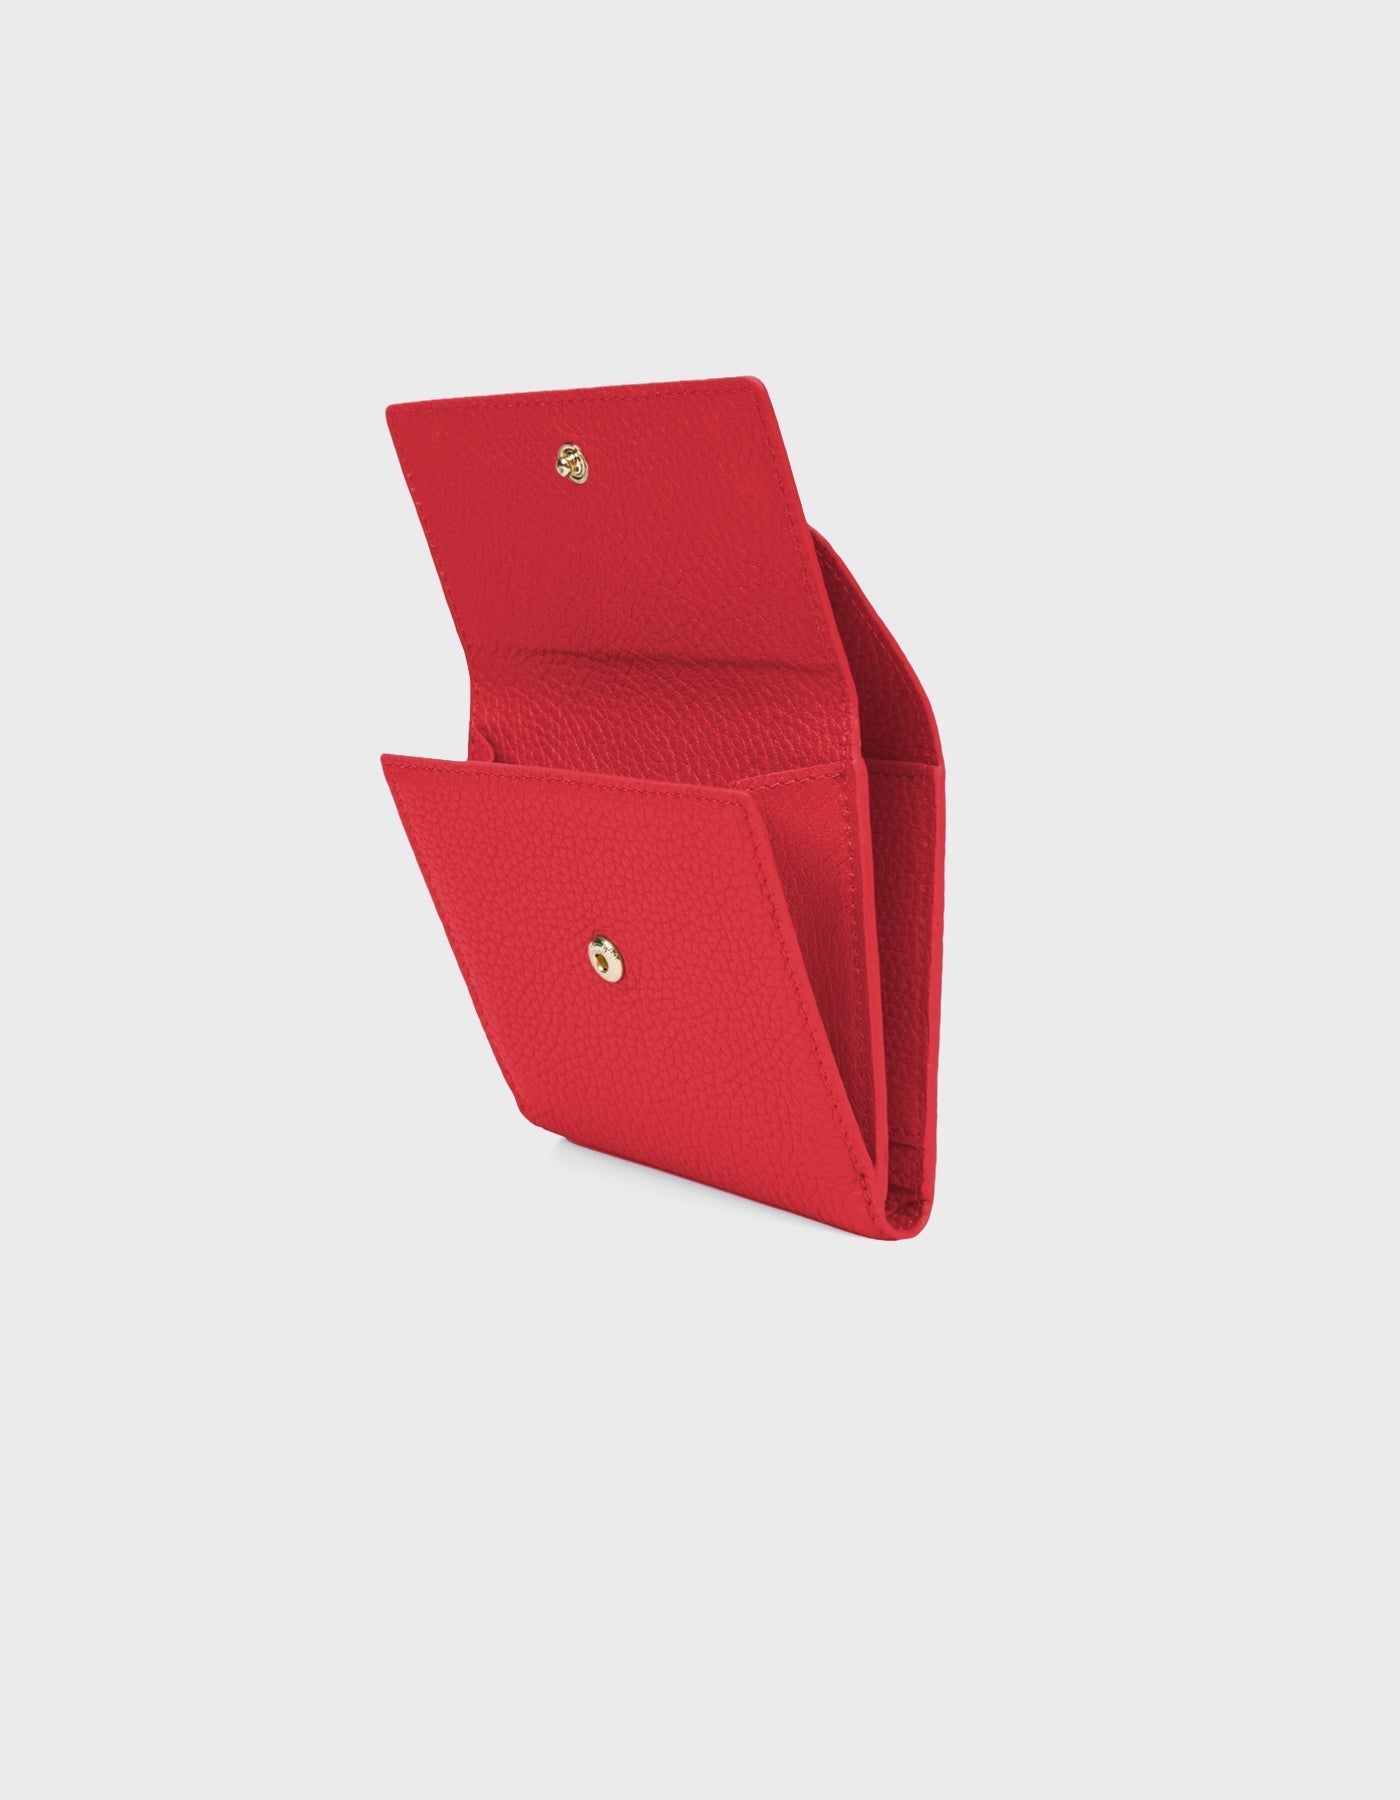 HiVa Atelier - Larus Compact Wallet Red